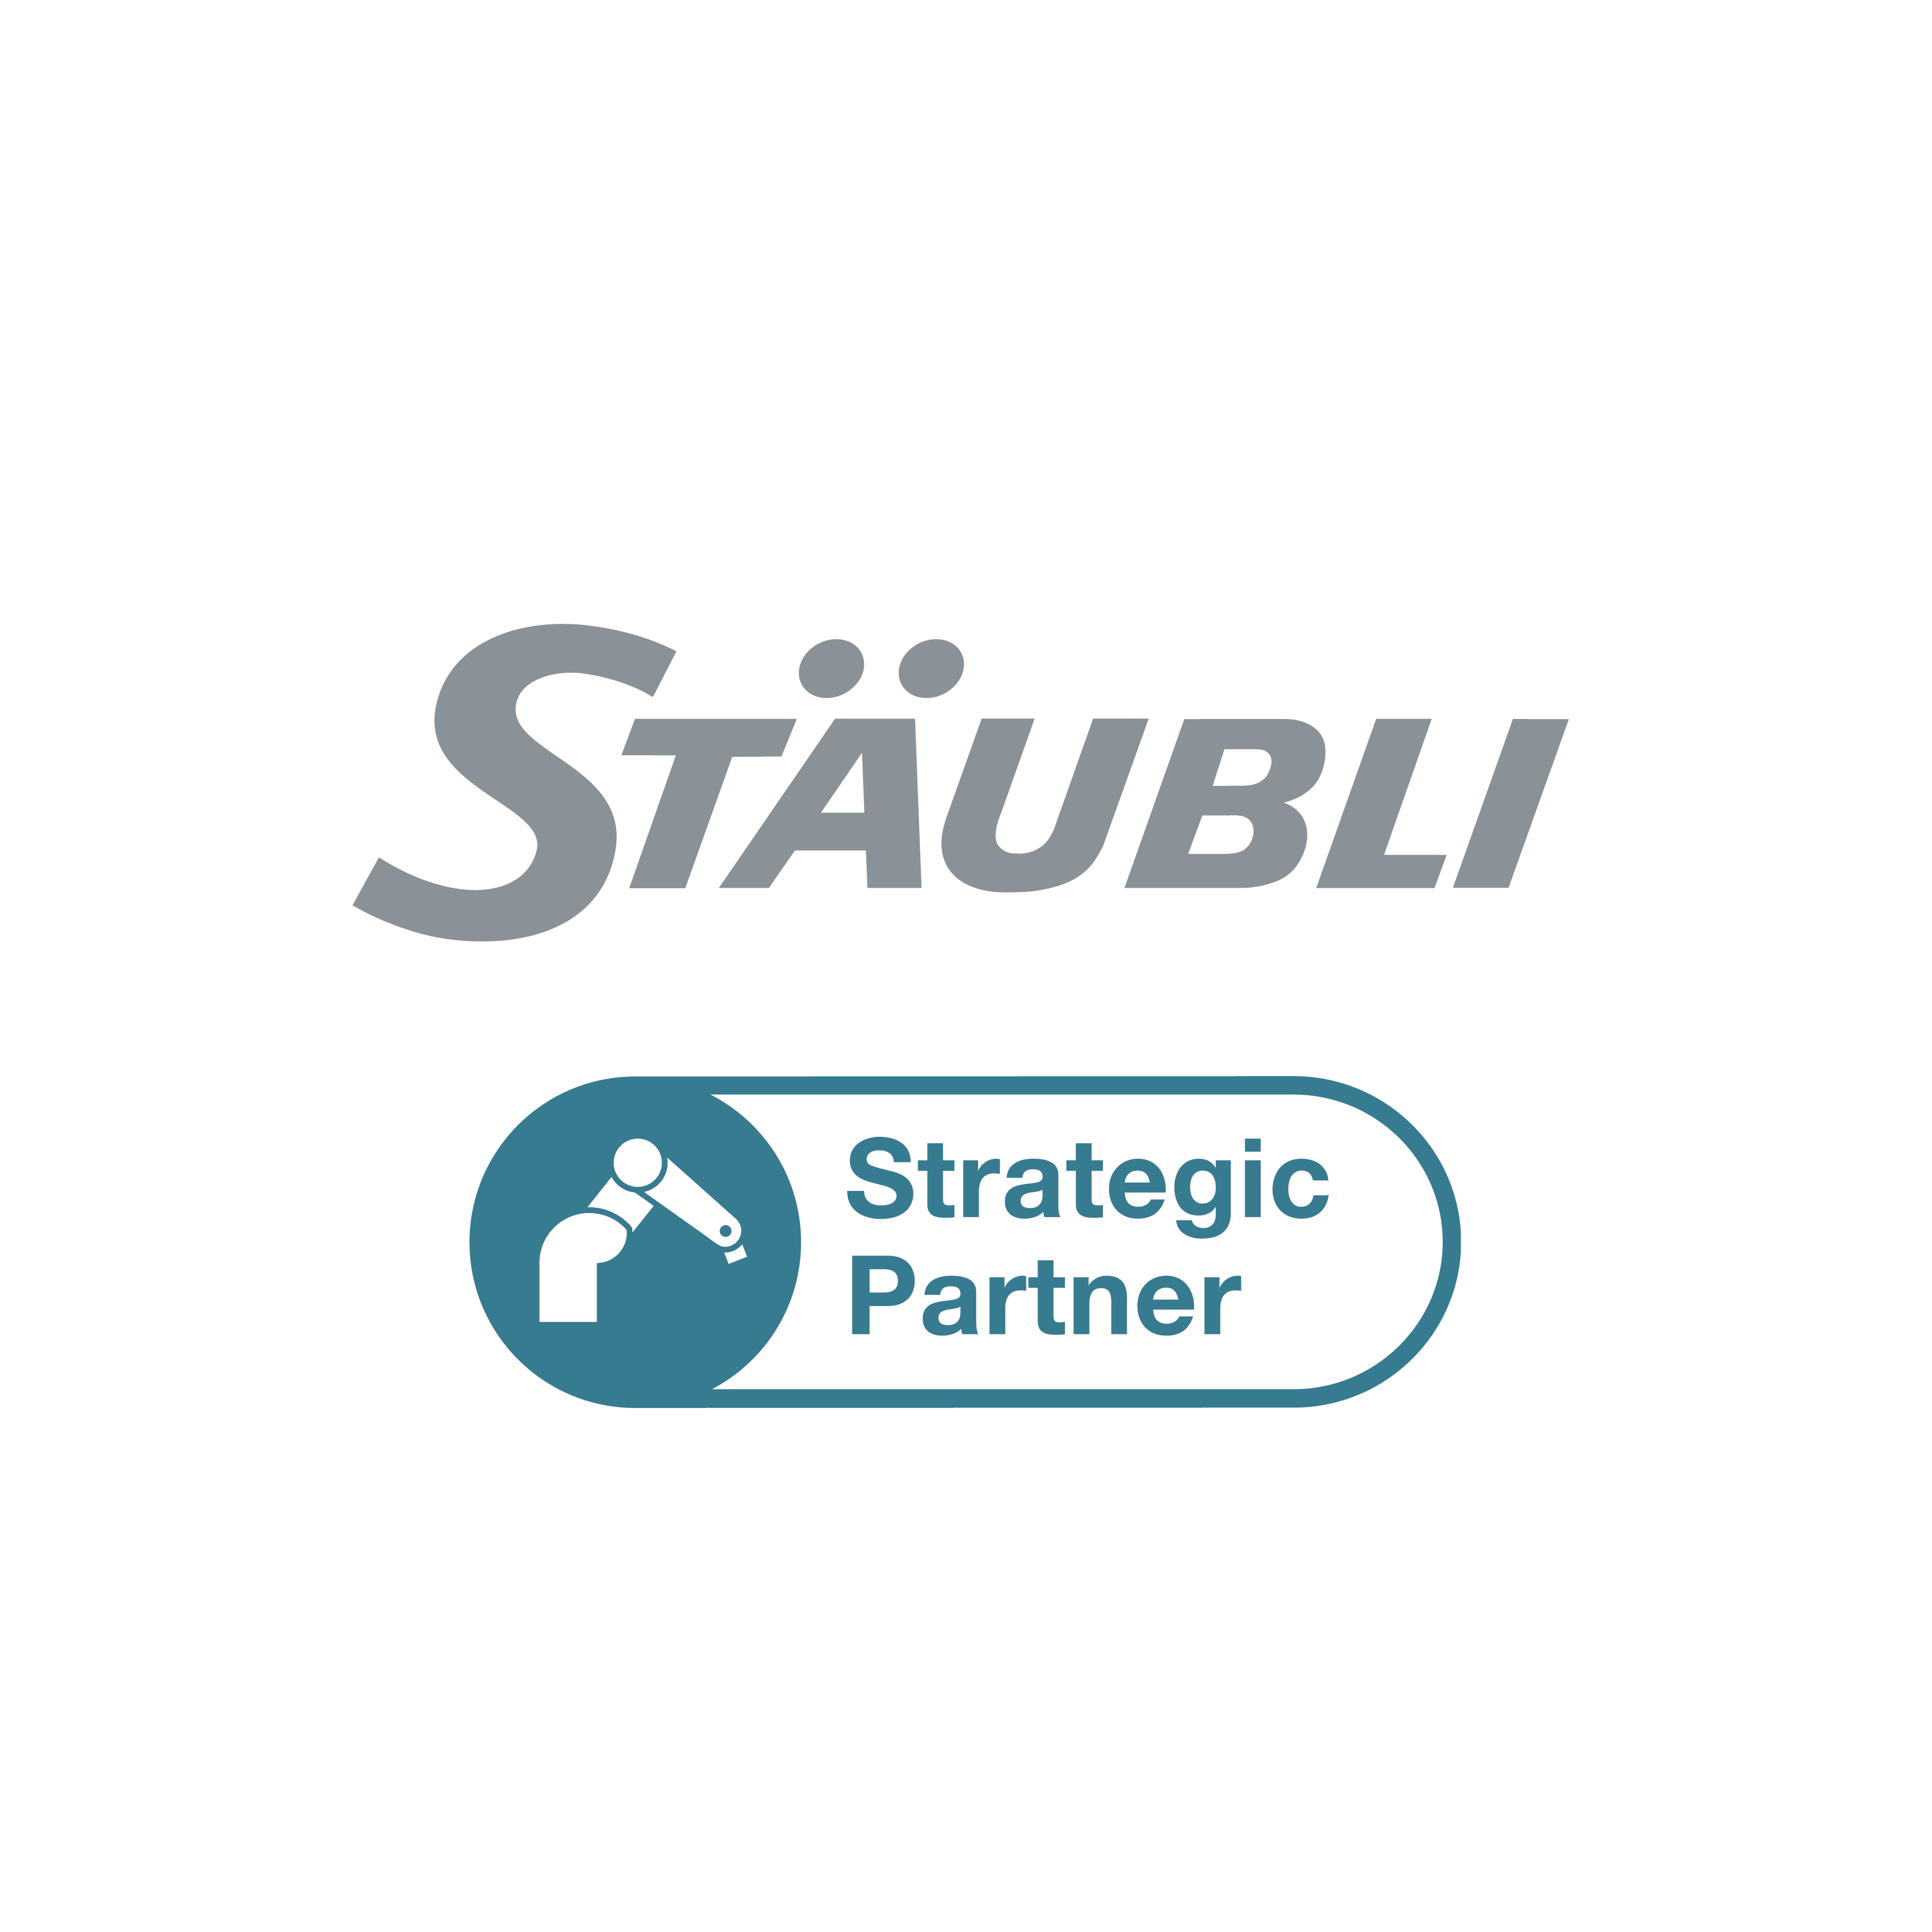 Staubli Logo_Strategic Partner